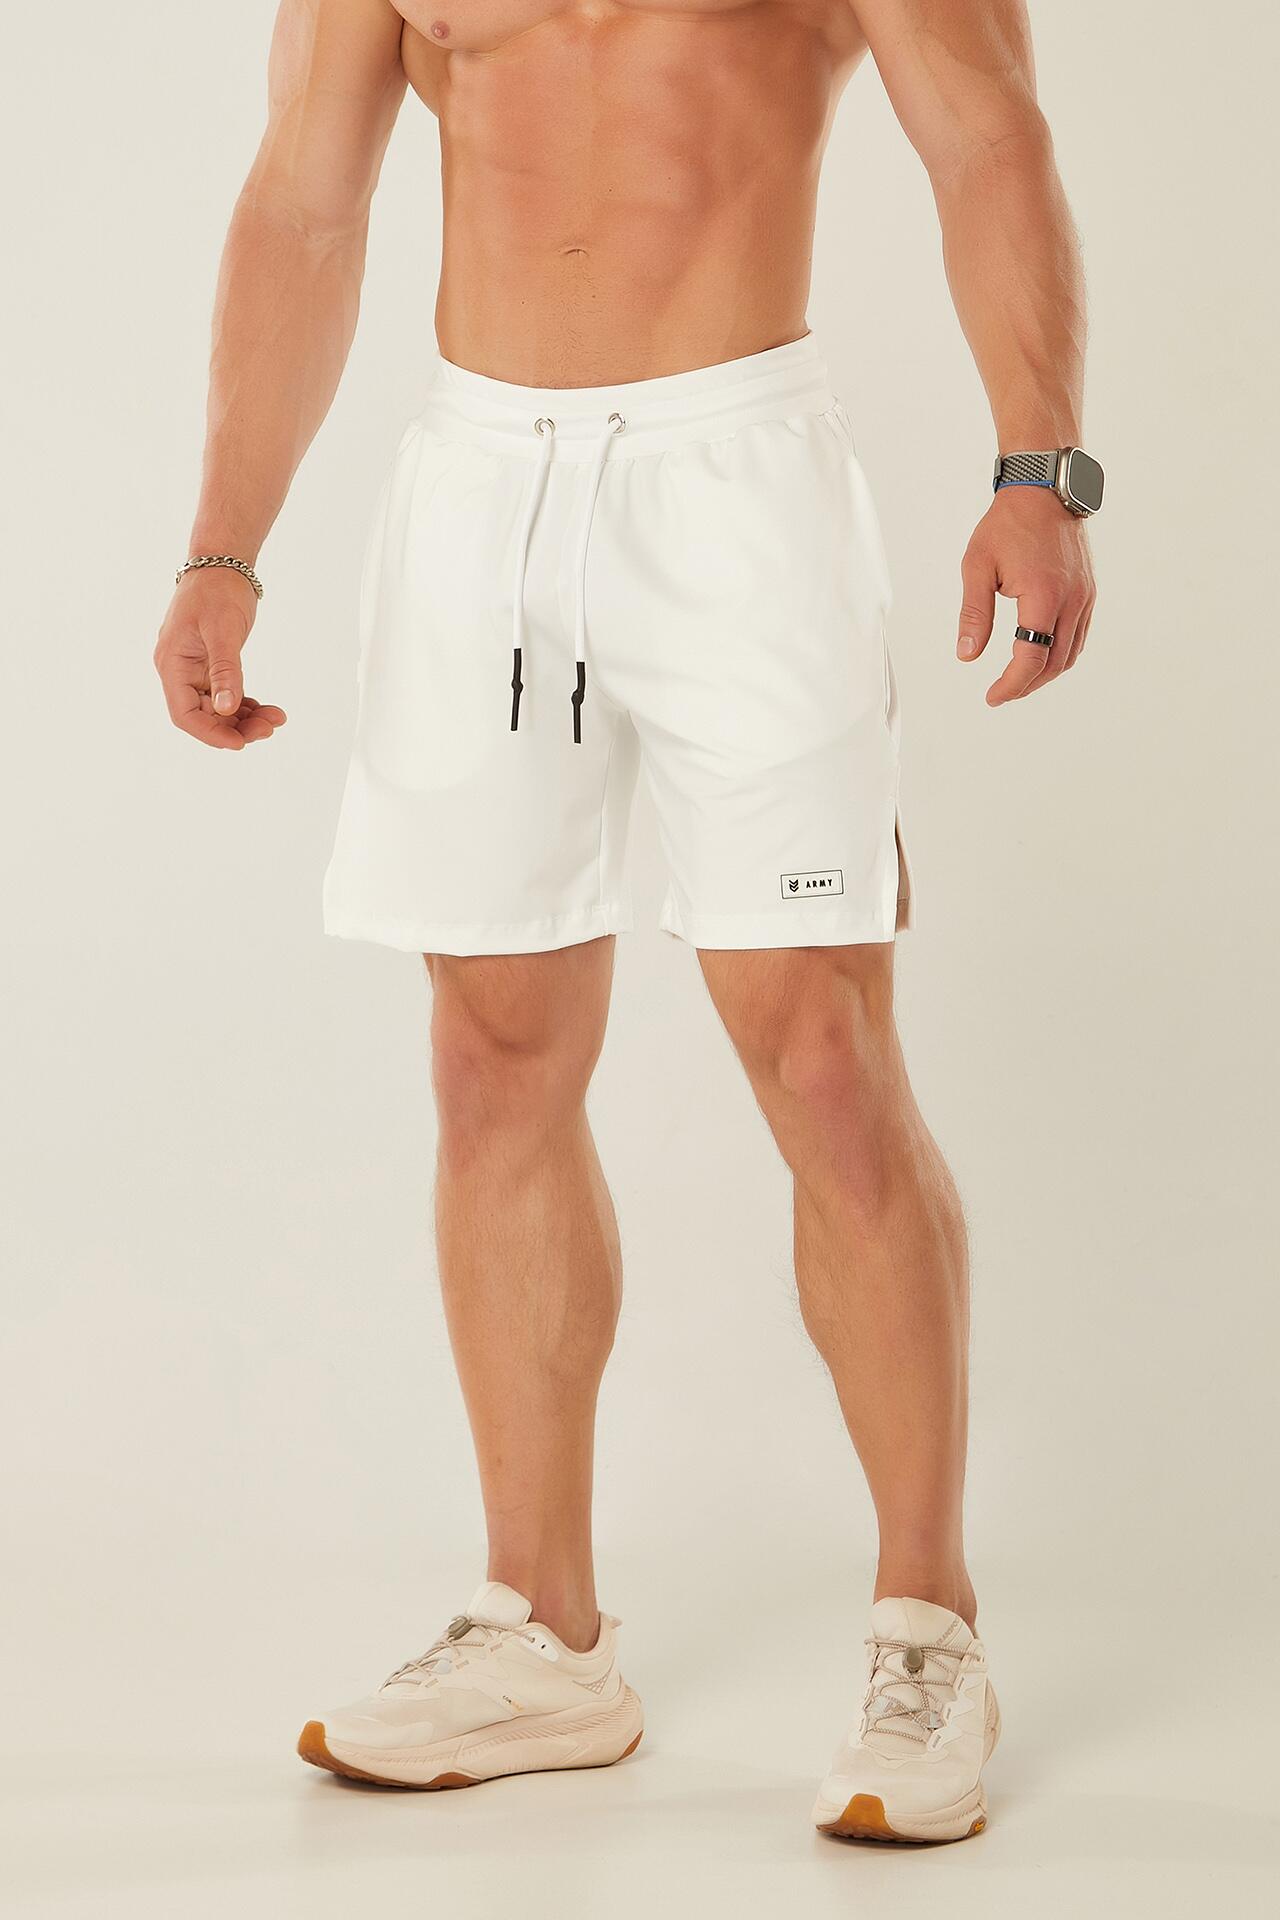 Shorts Boxer Soft Dry 2.0 - Branco - P